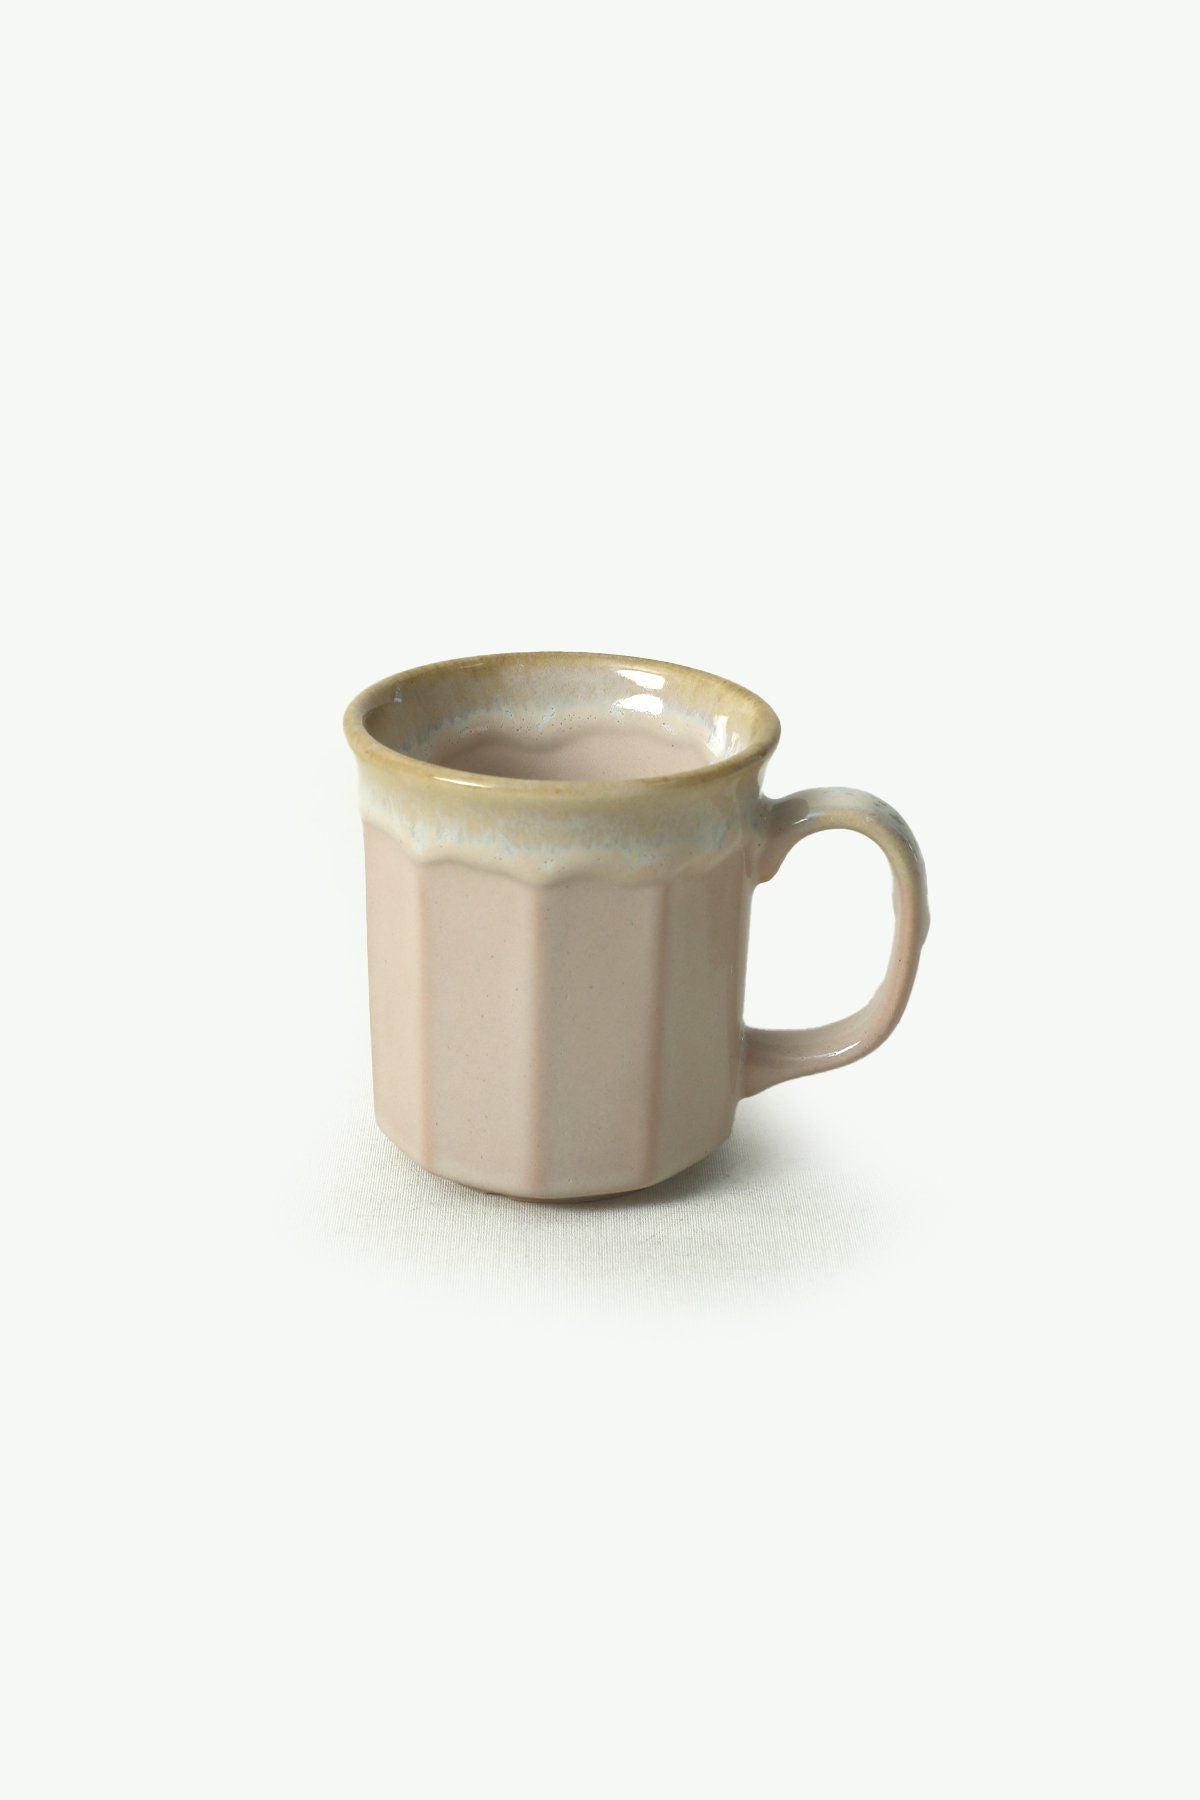 X000155400 - Mug Set (6 Pieces)